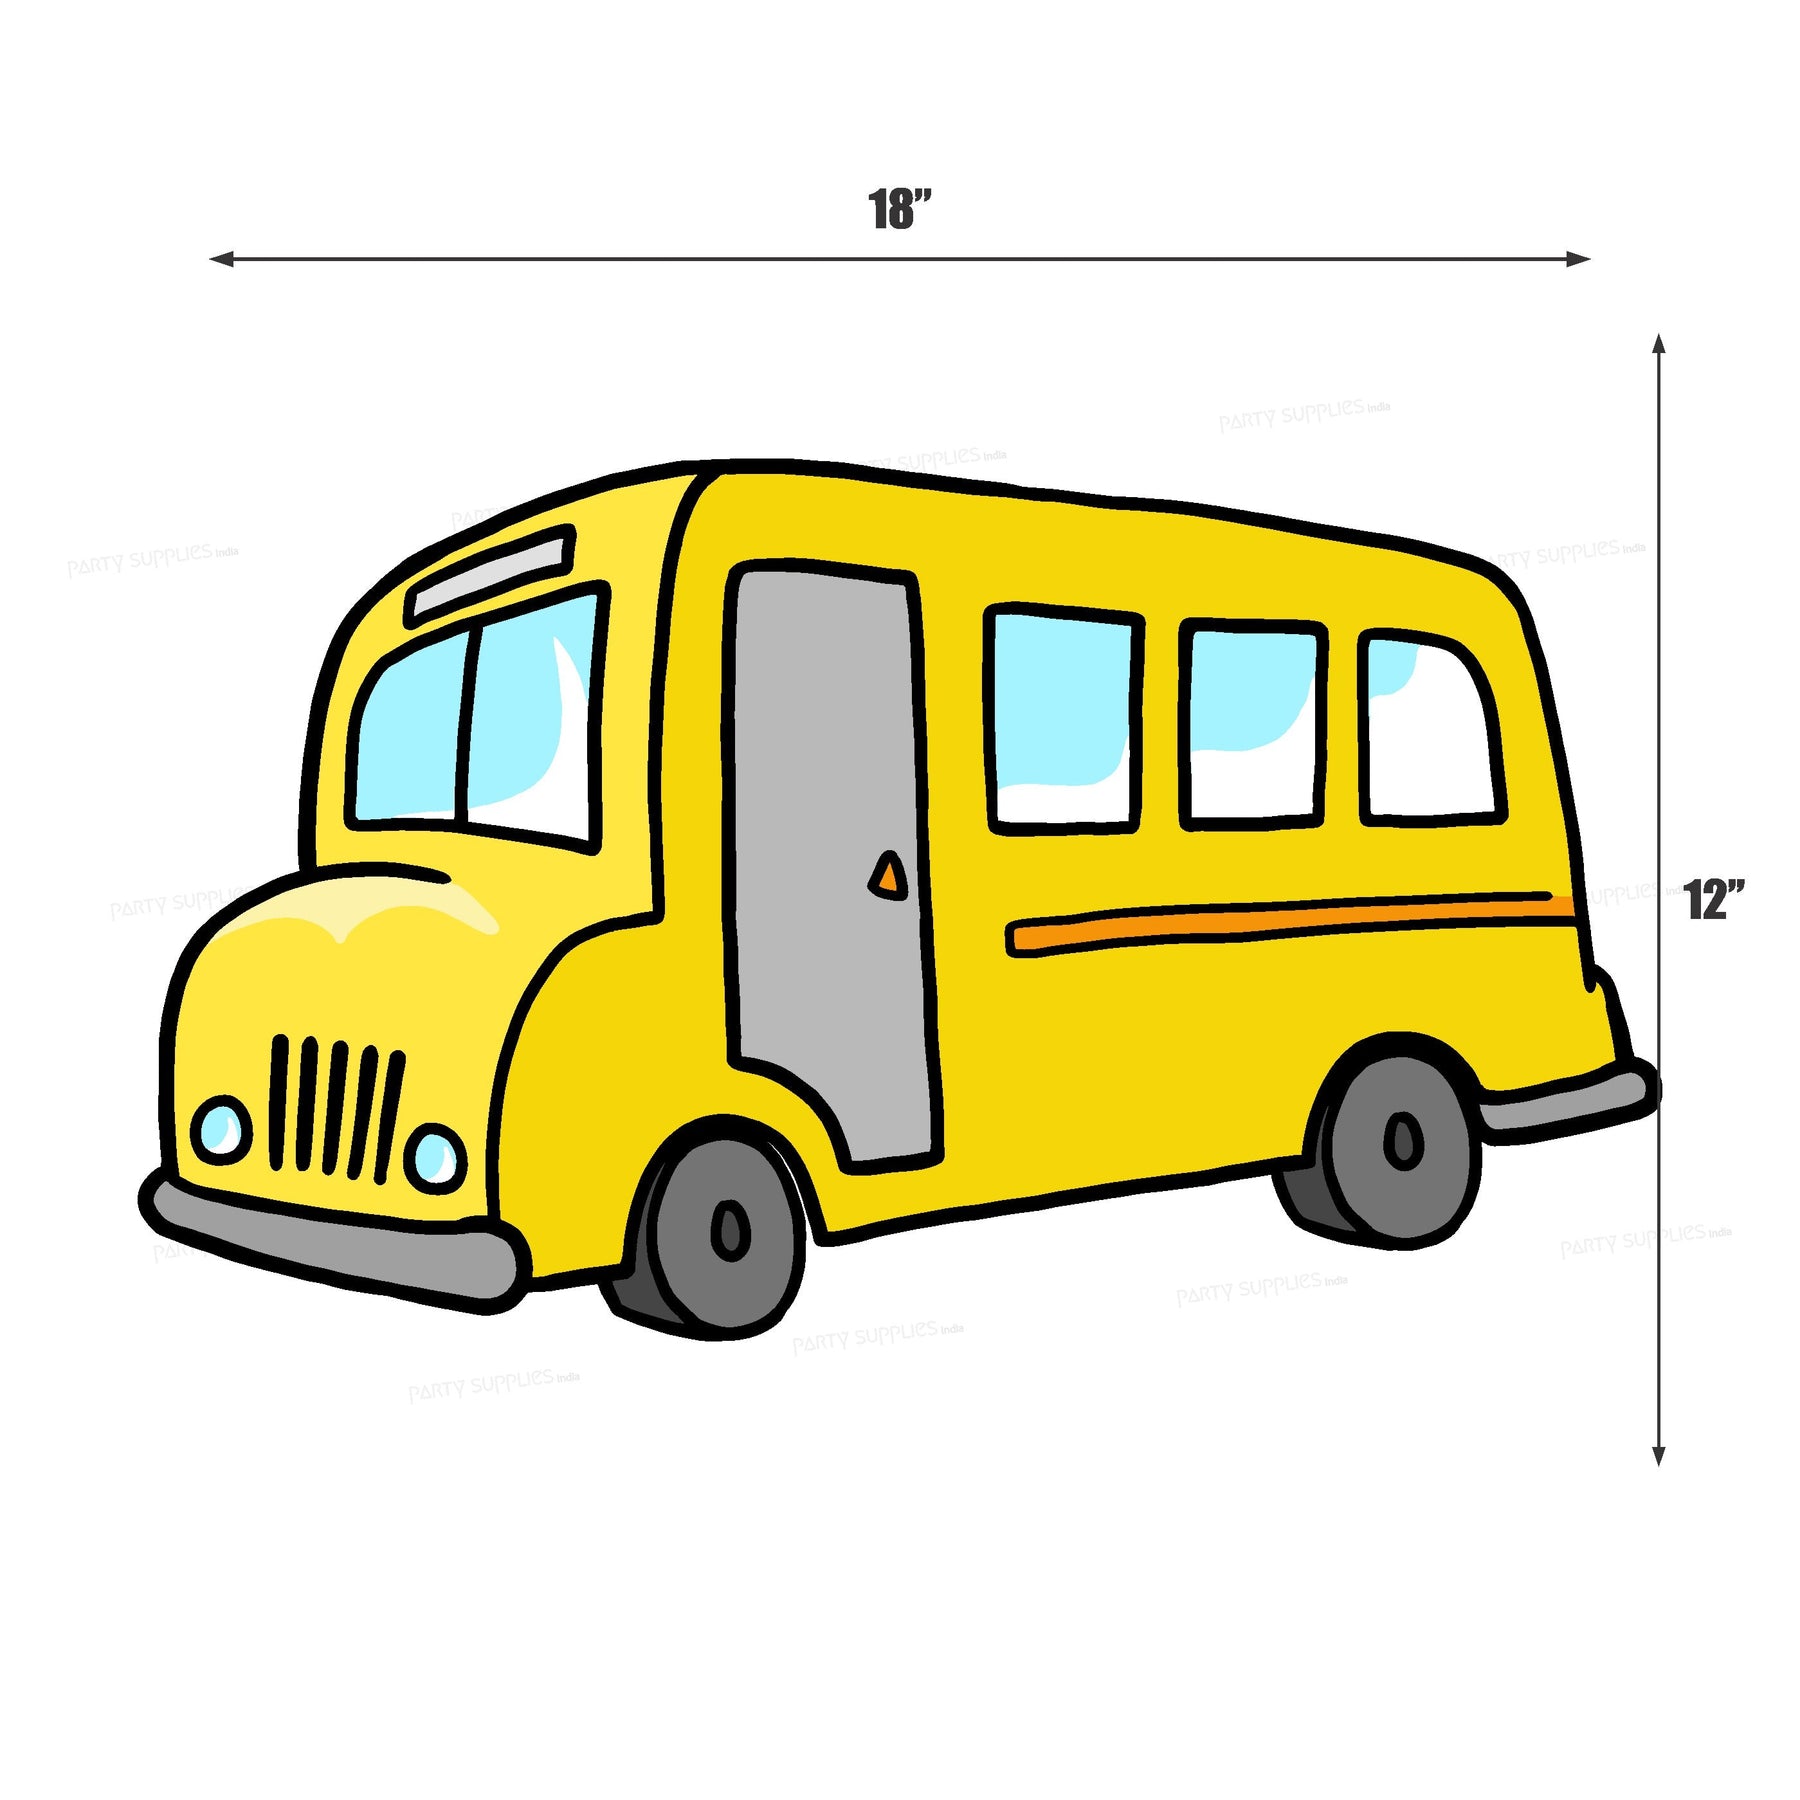 PSI Baby Bus Theme Cutout - 05